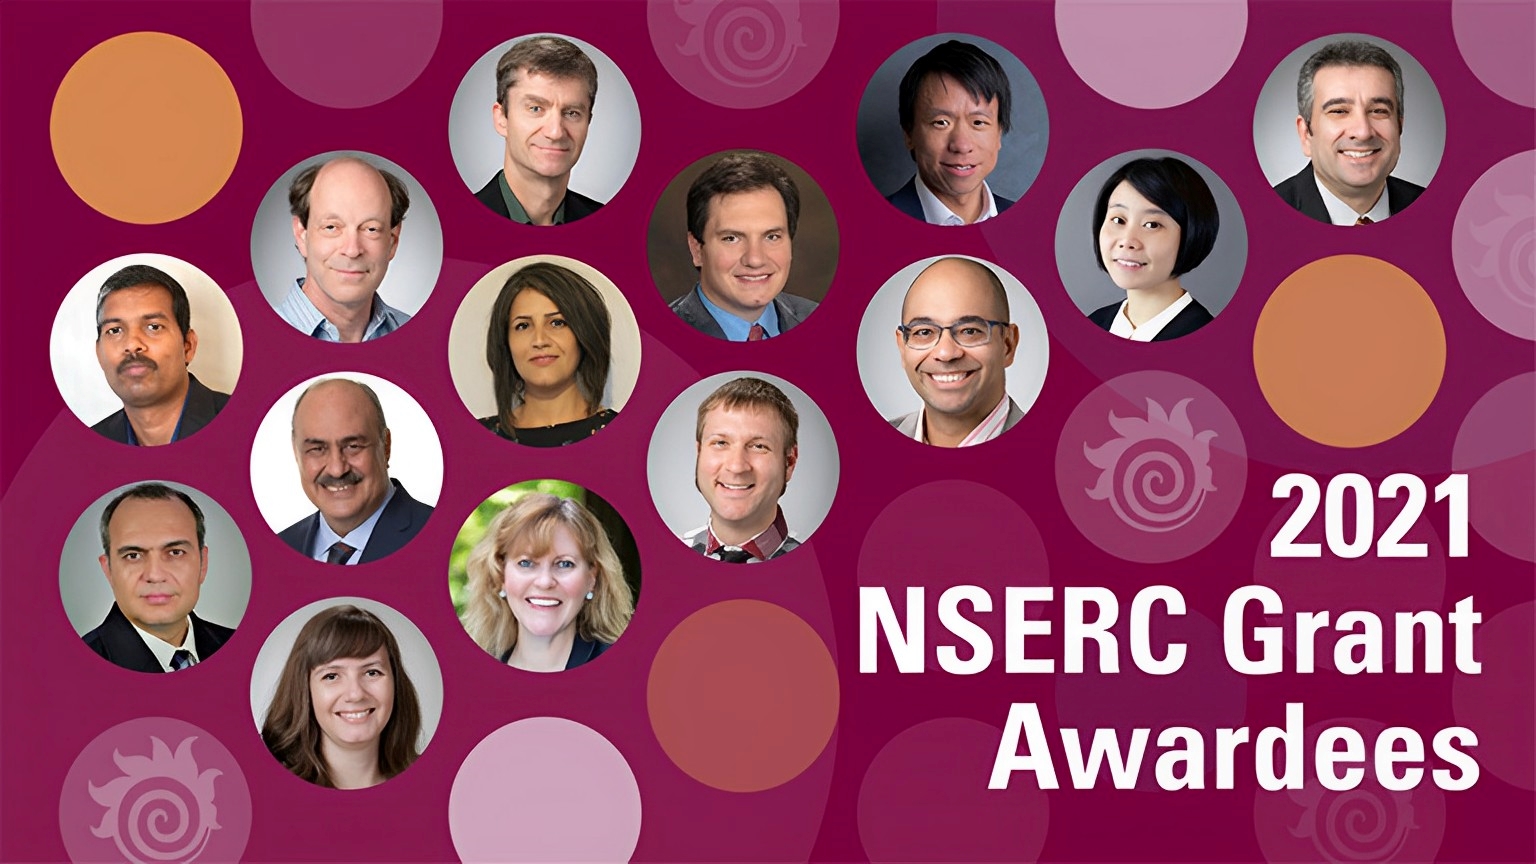 Portraits of NSERC Grant awardees